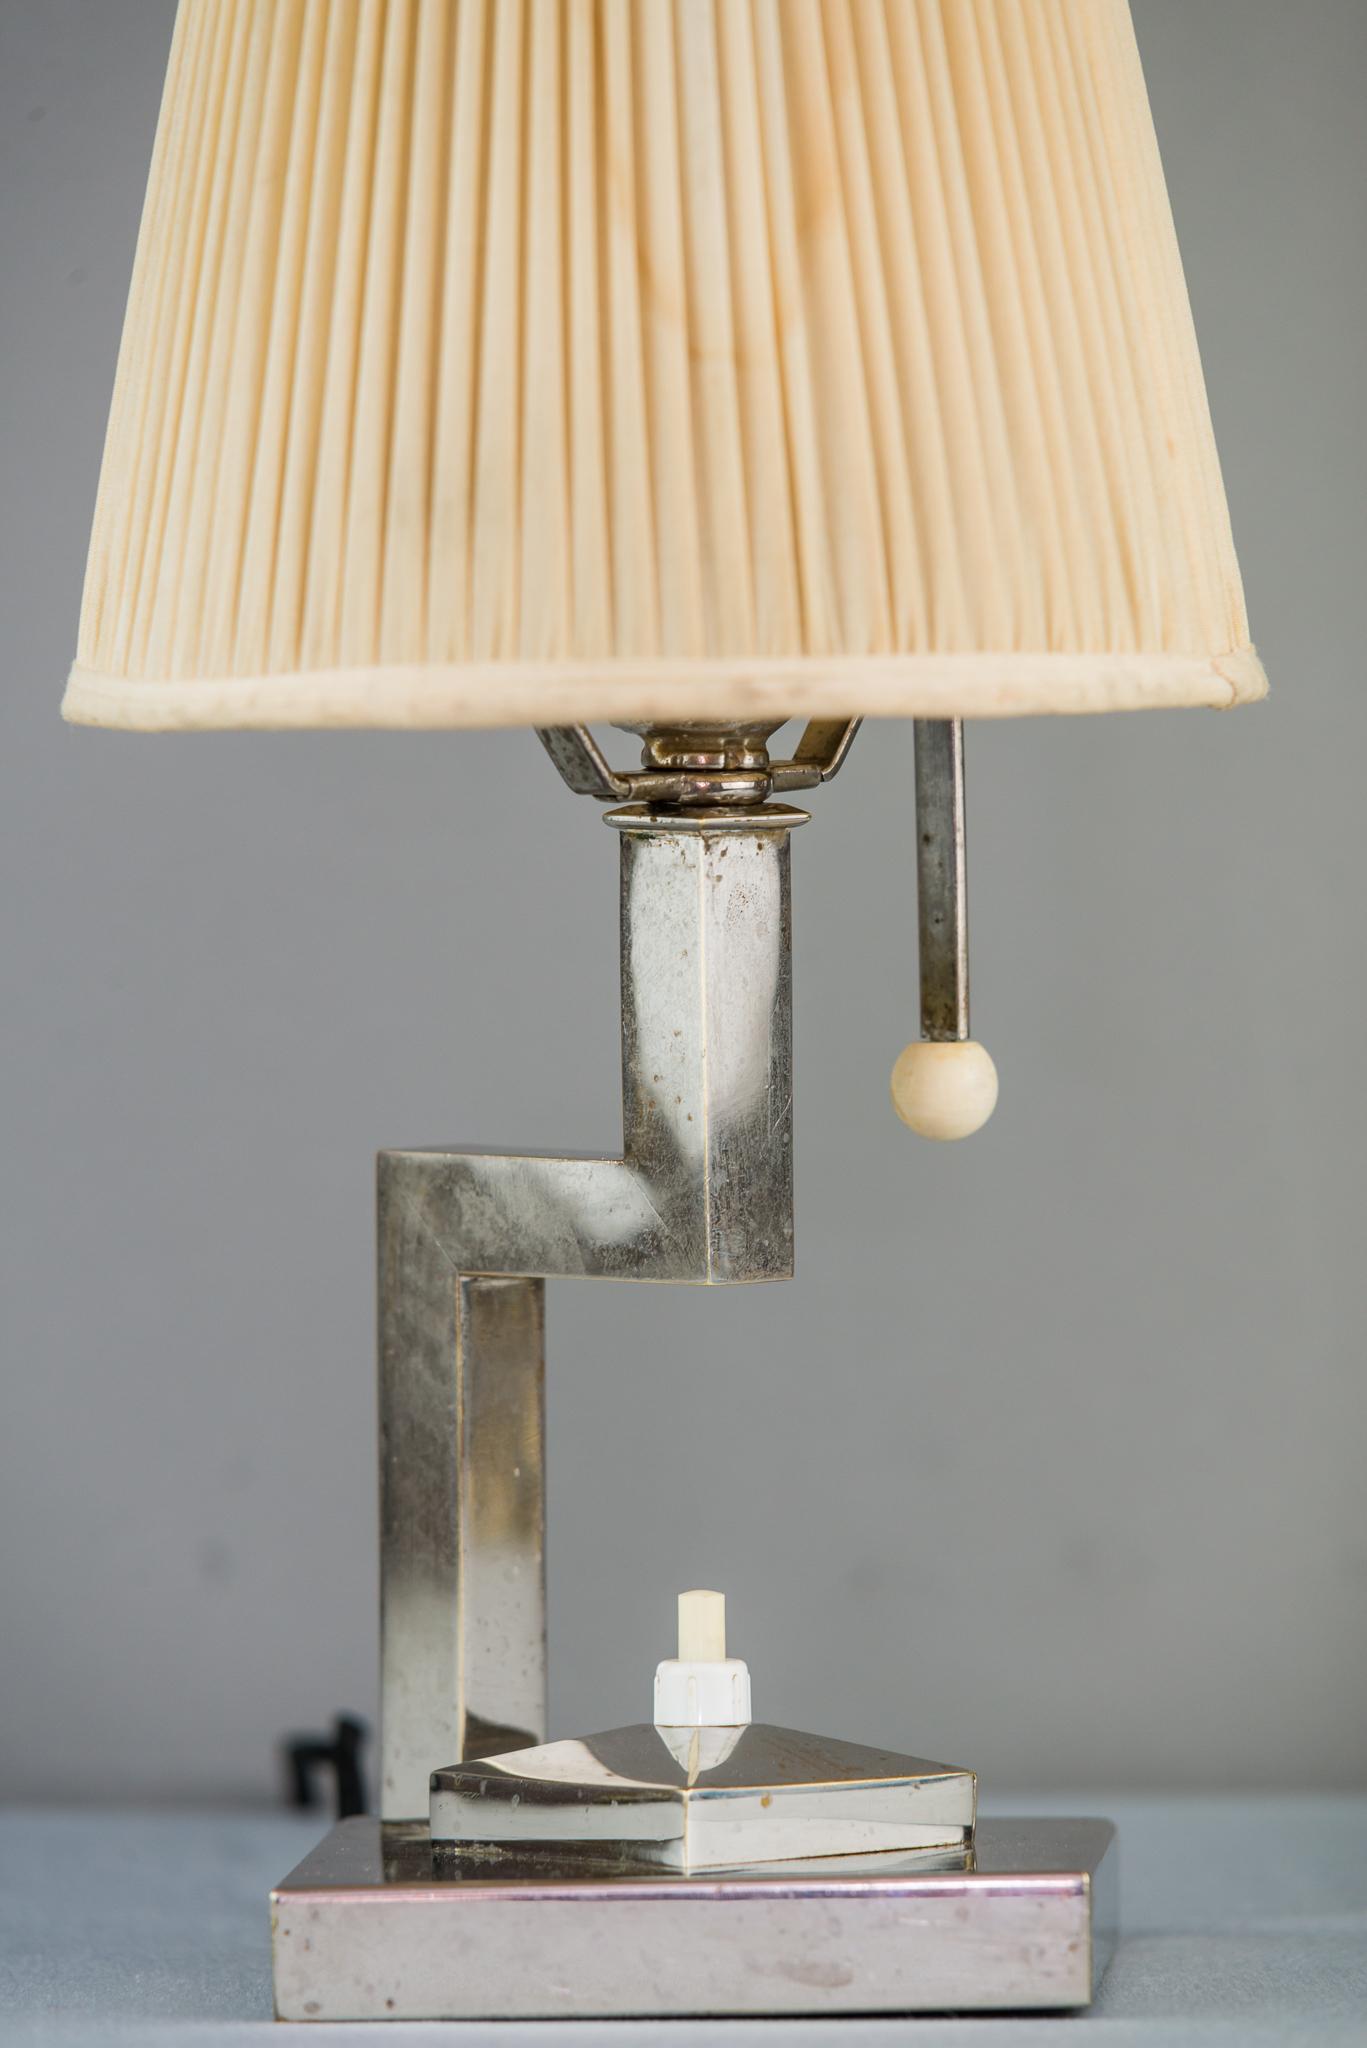 Austrian Art Deco Table Lamp Nickel-Plated with Original Shade, circa 1920s